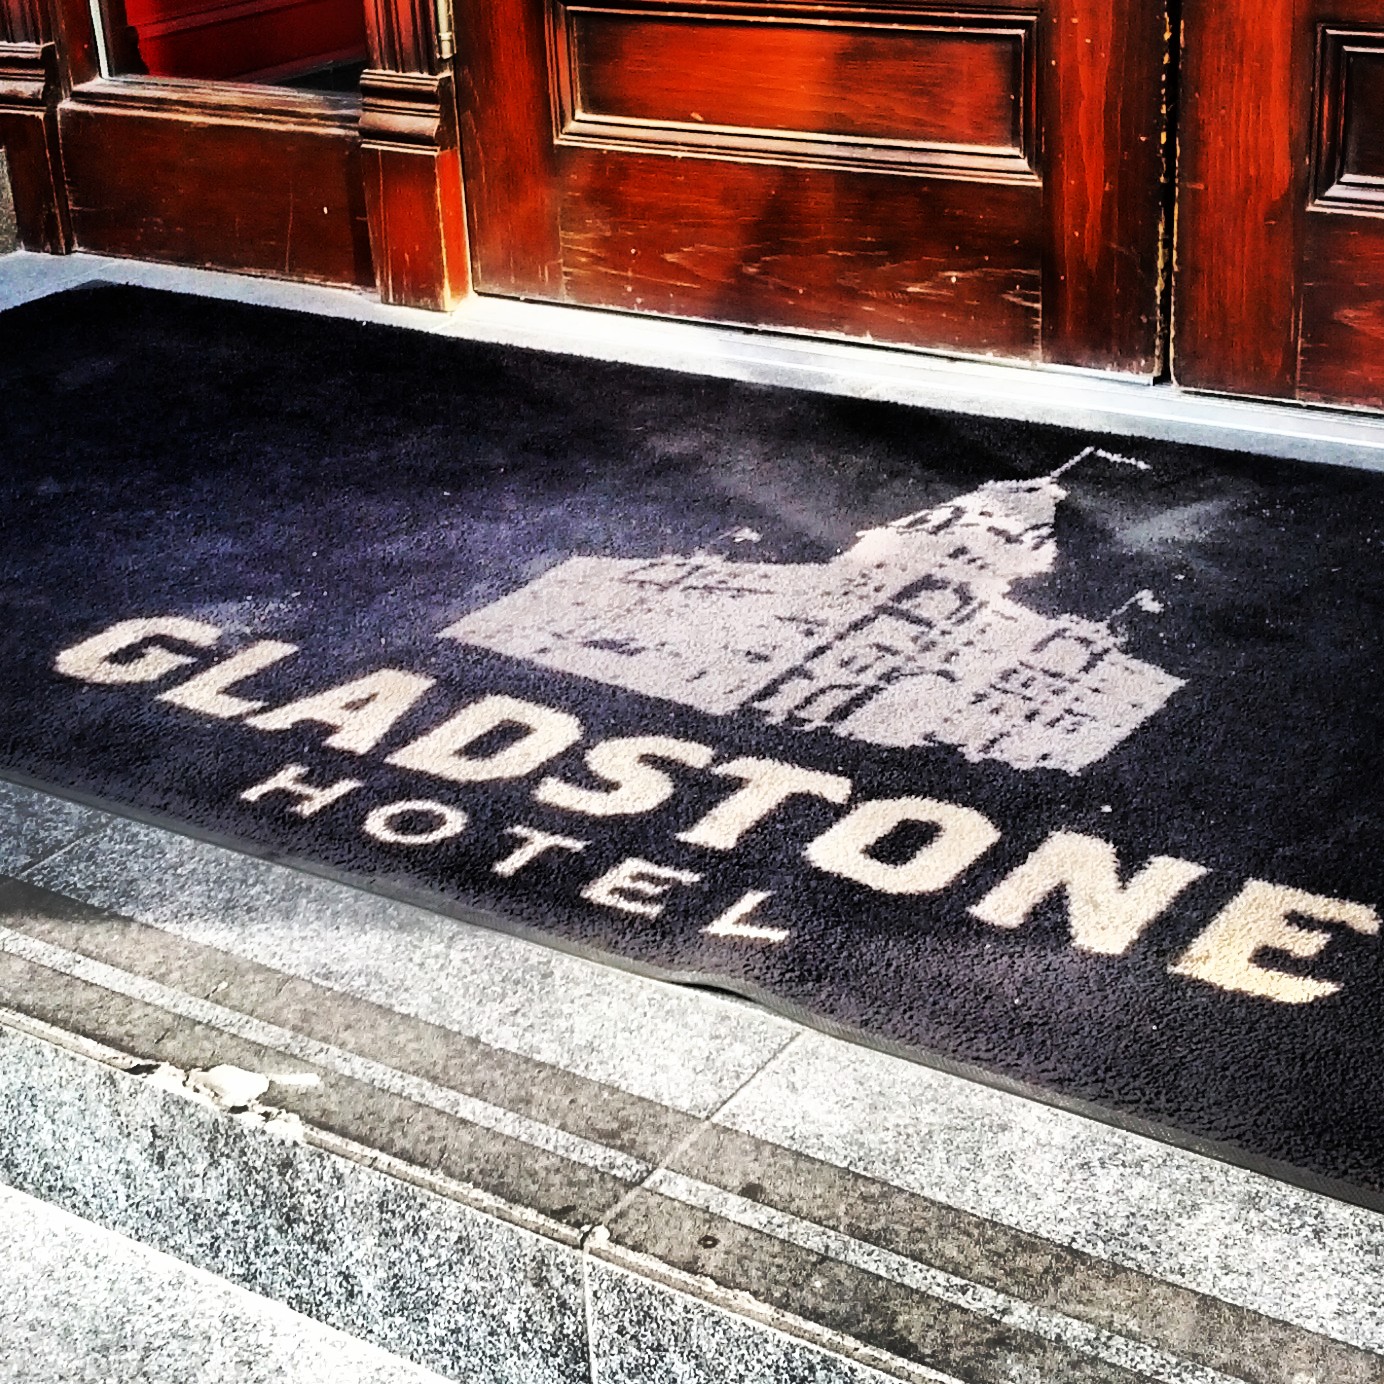 The Gladstone Hotel: For the Artsy Masalamomma